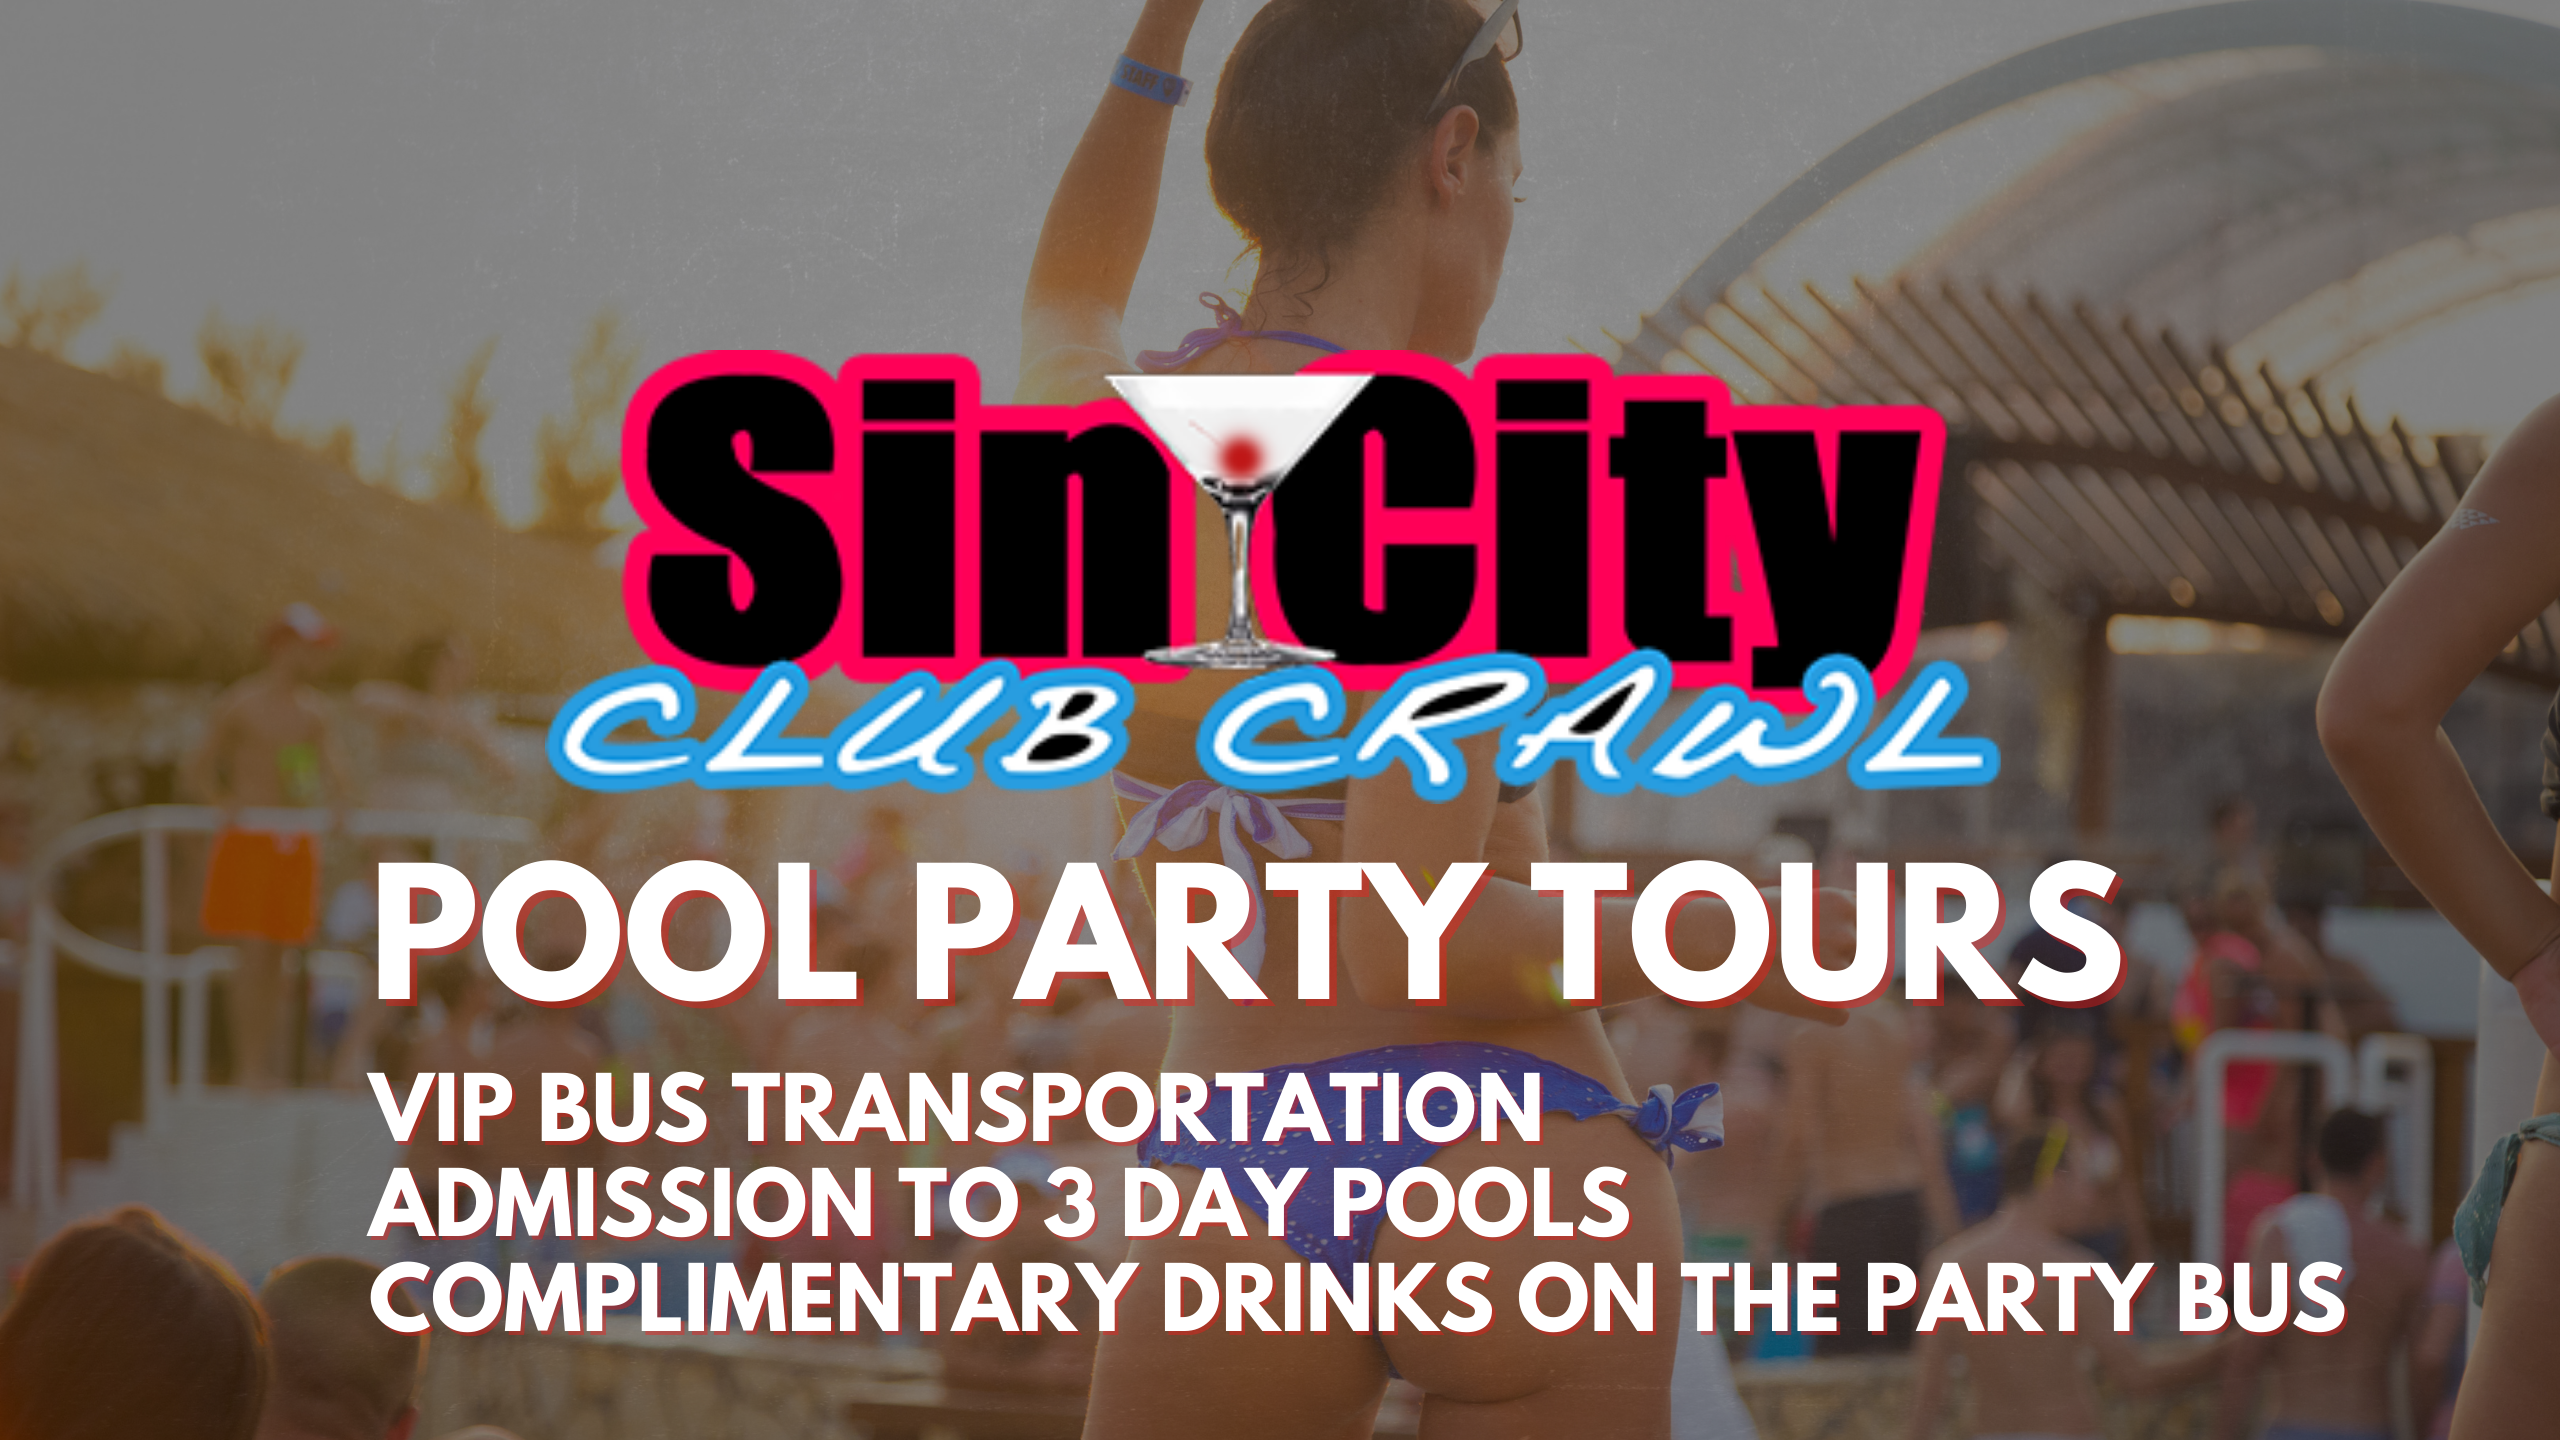 "Day Pool Party Tours Las Vegas"